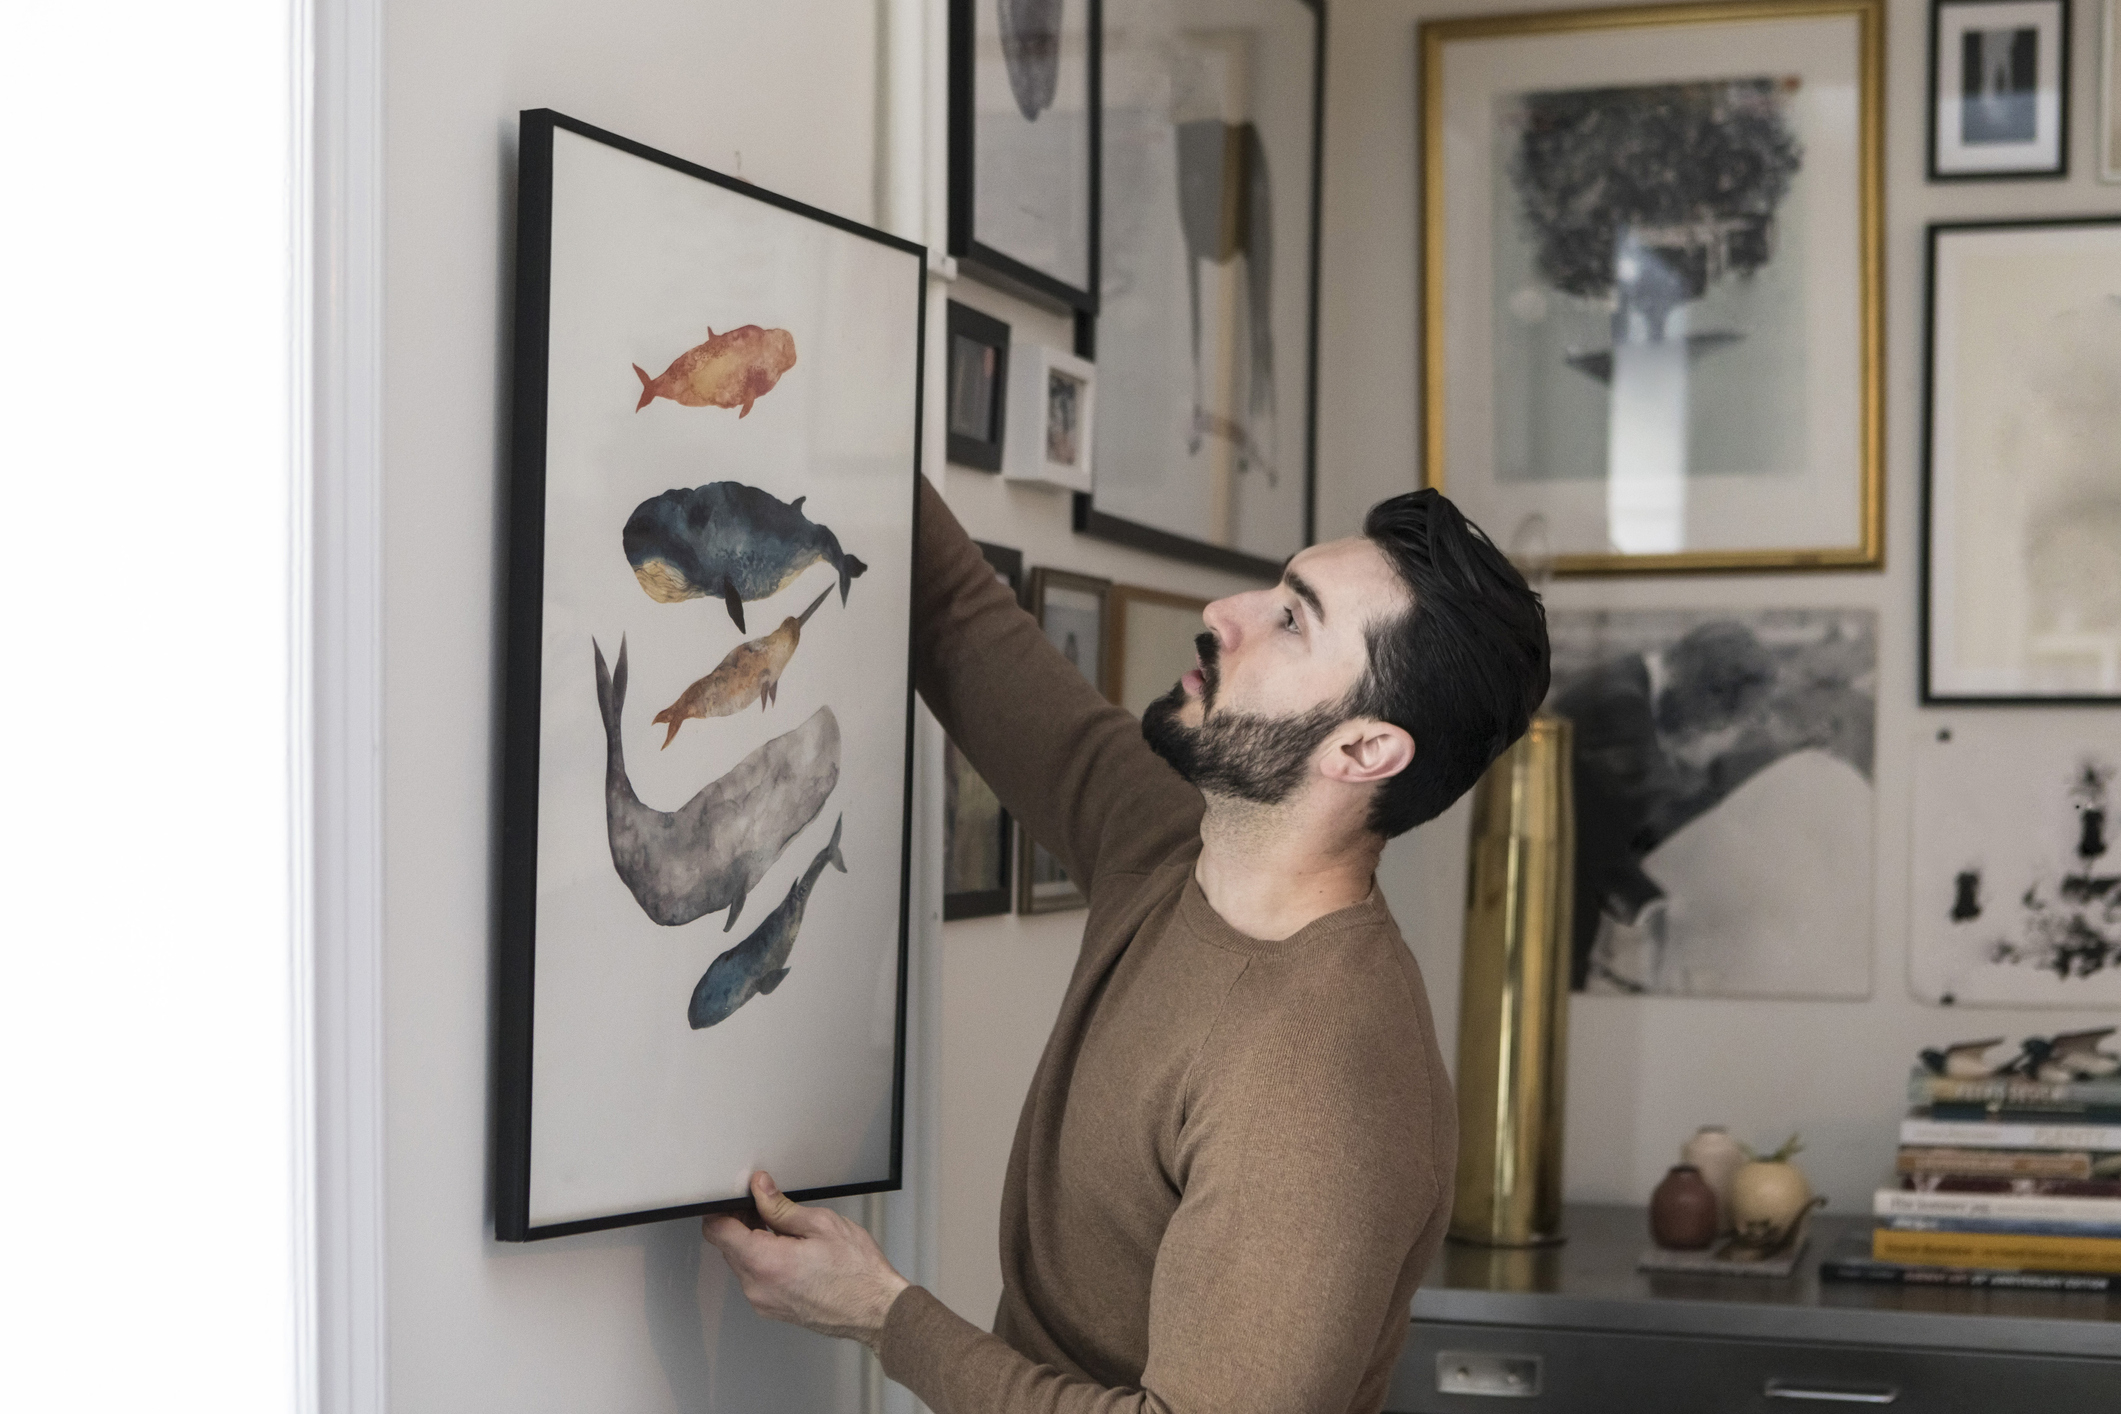 A man hanging up artwork